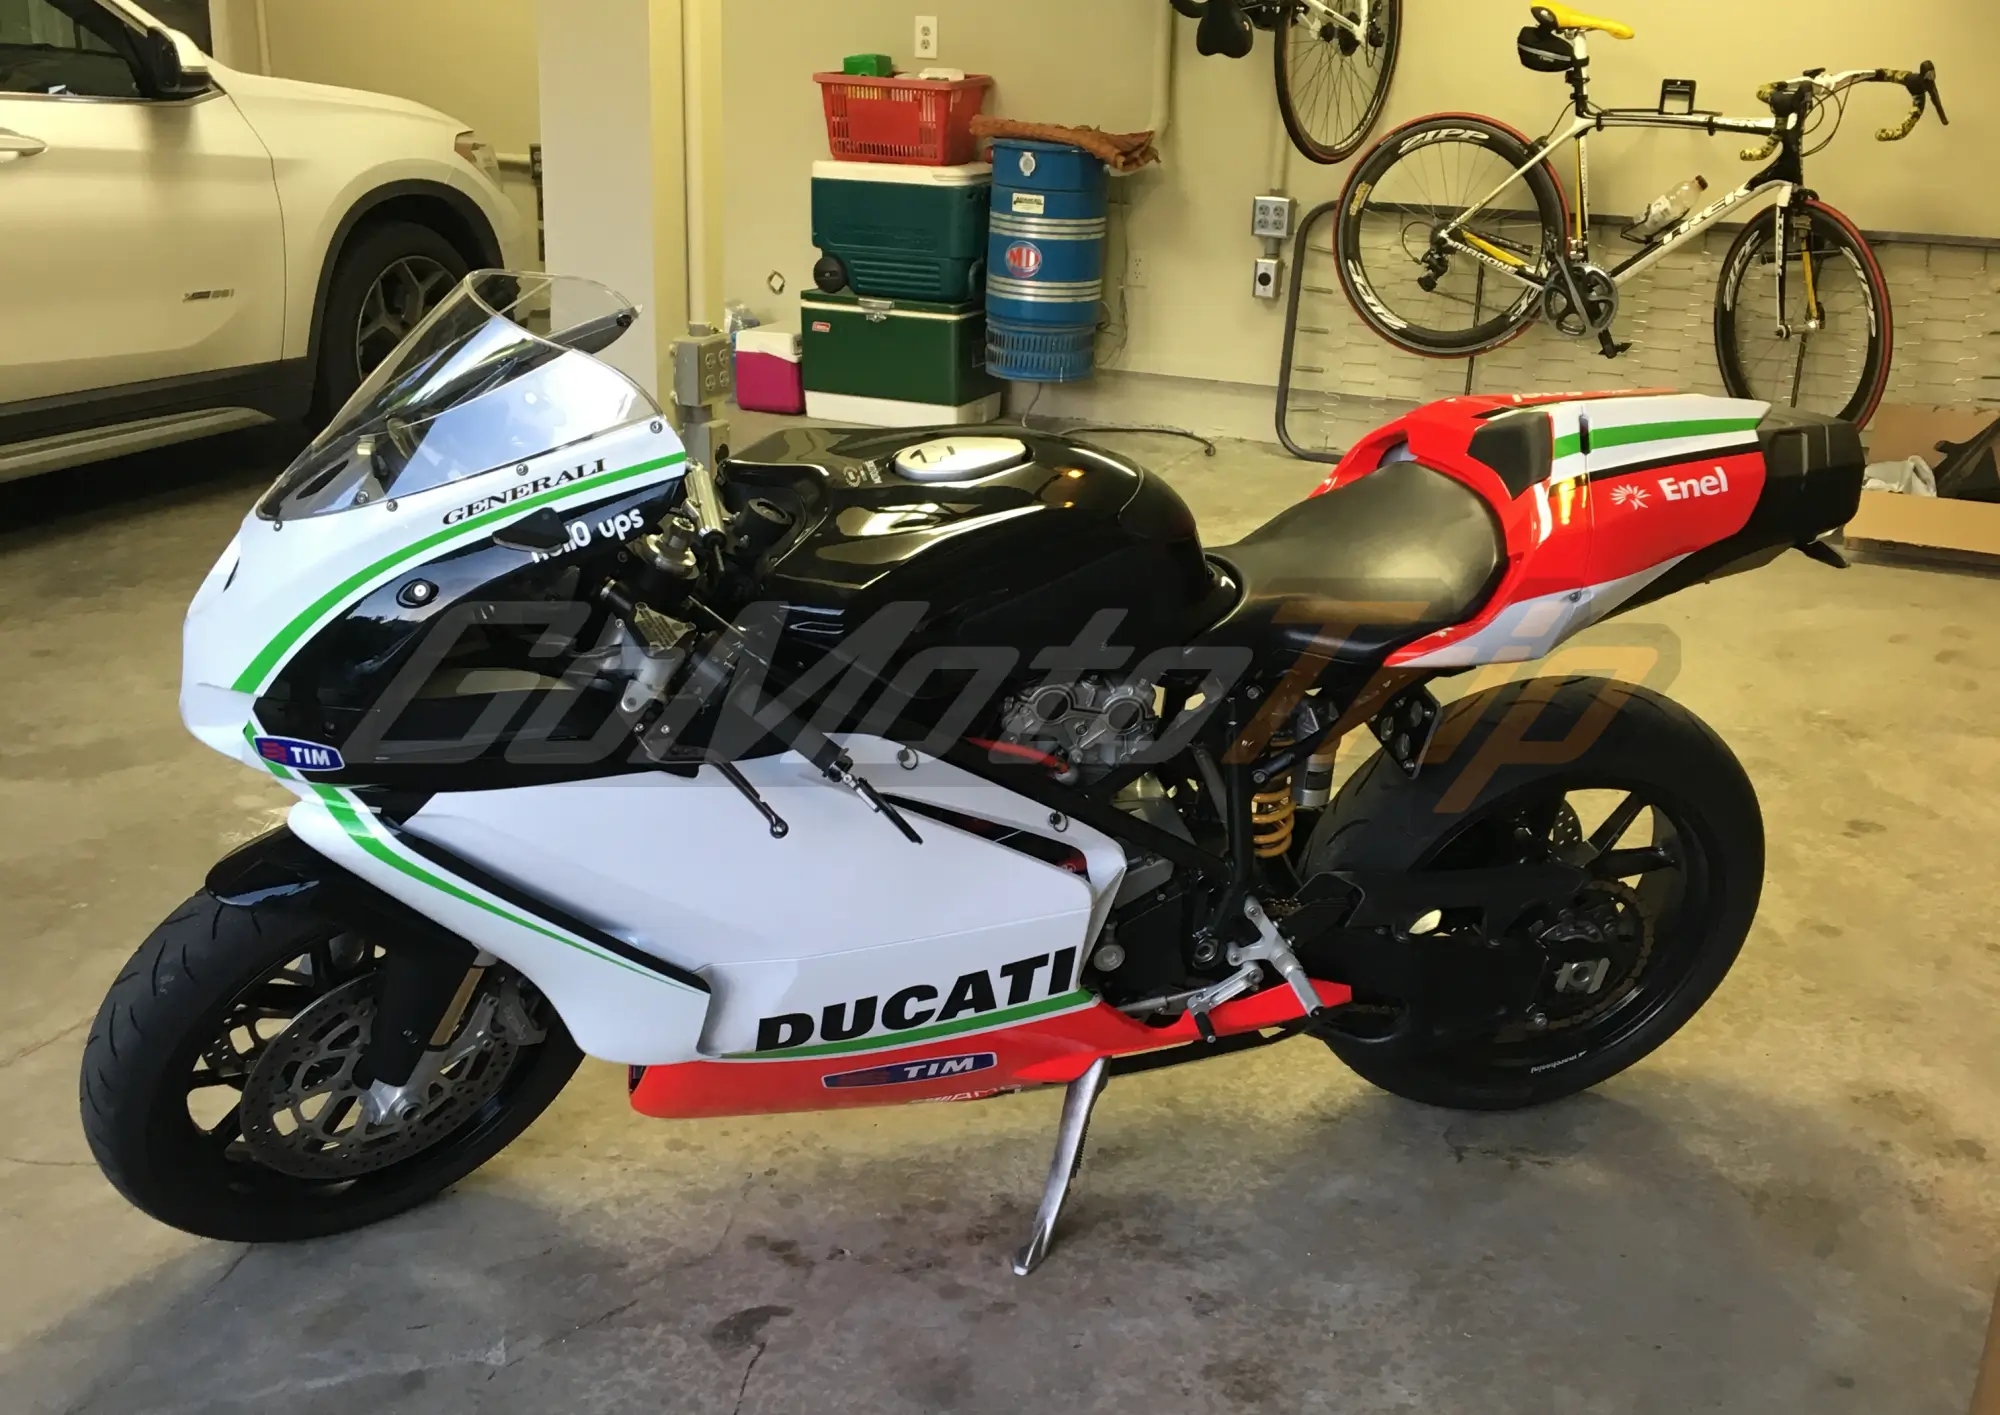 Rider-Review-Sam-Ducati-749-999-GP-12-Fairing-1